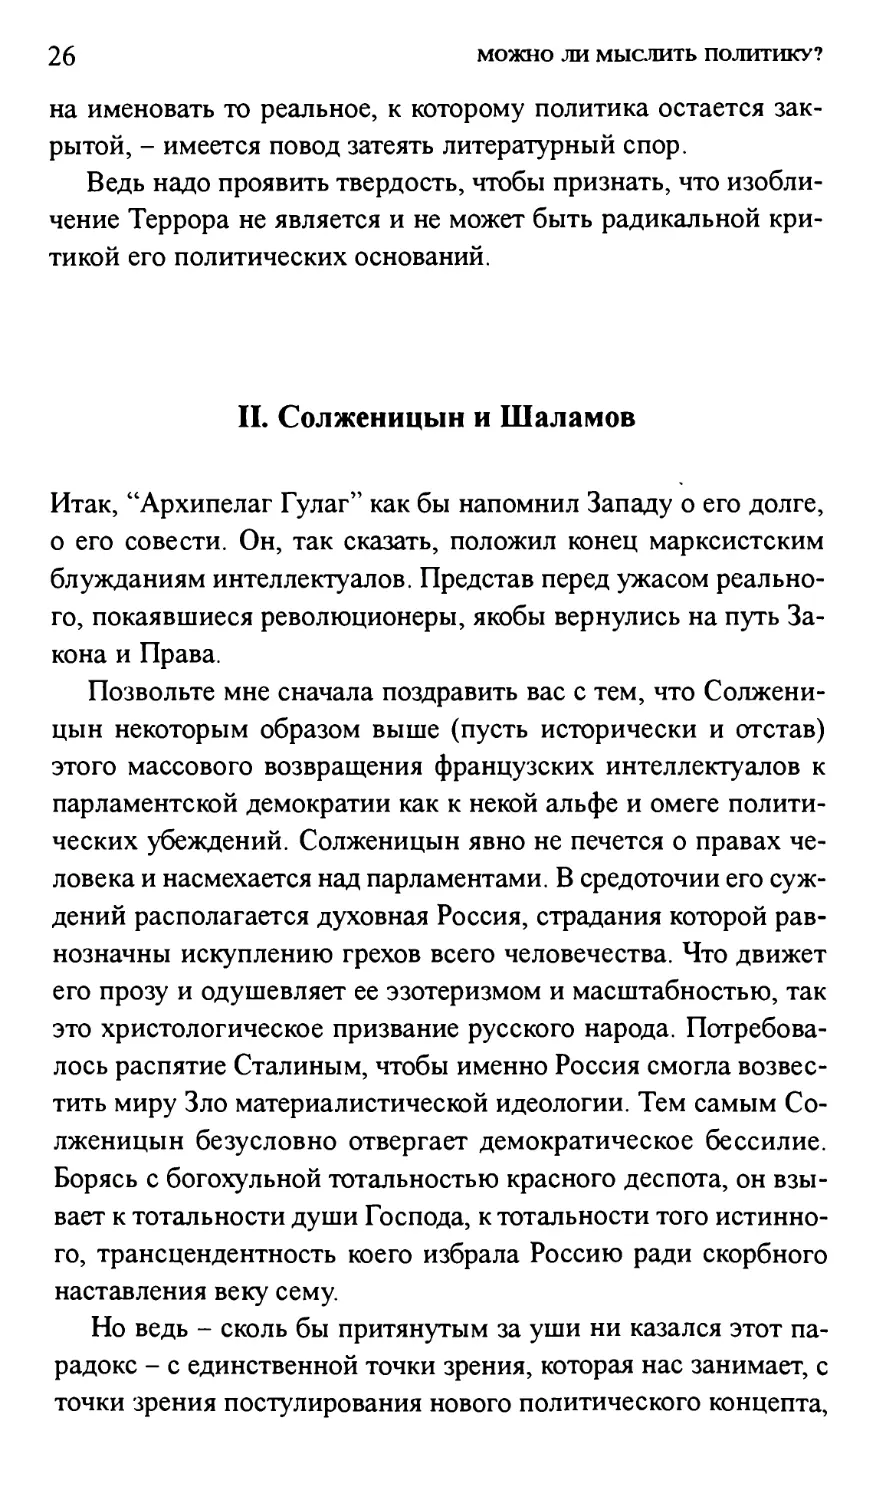 II. Солженицын и Шаламов